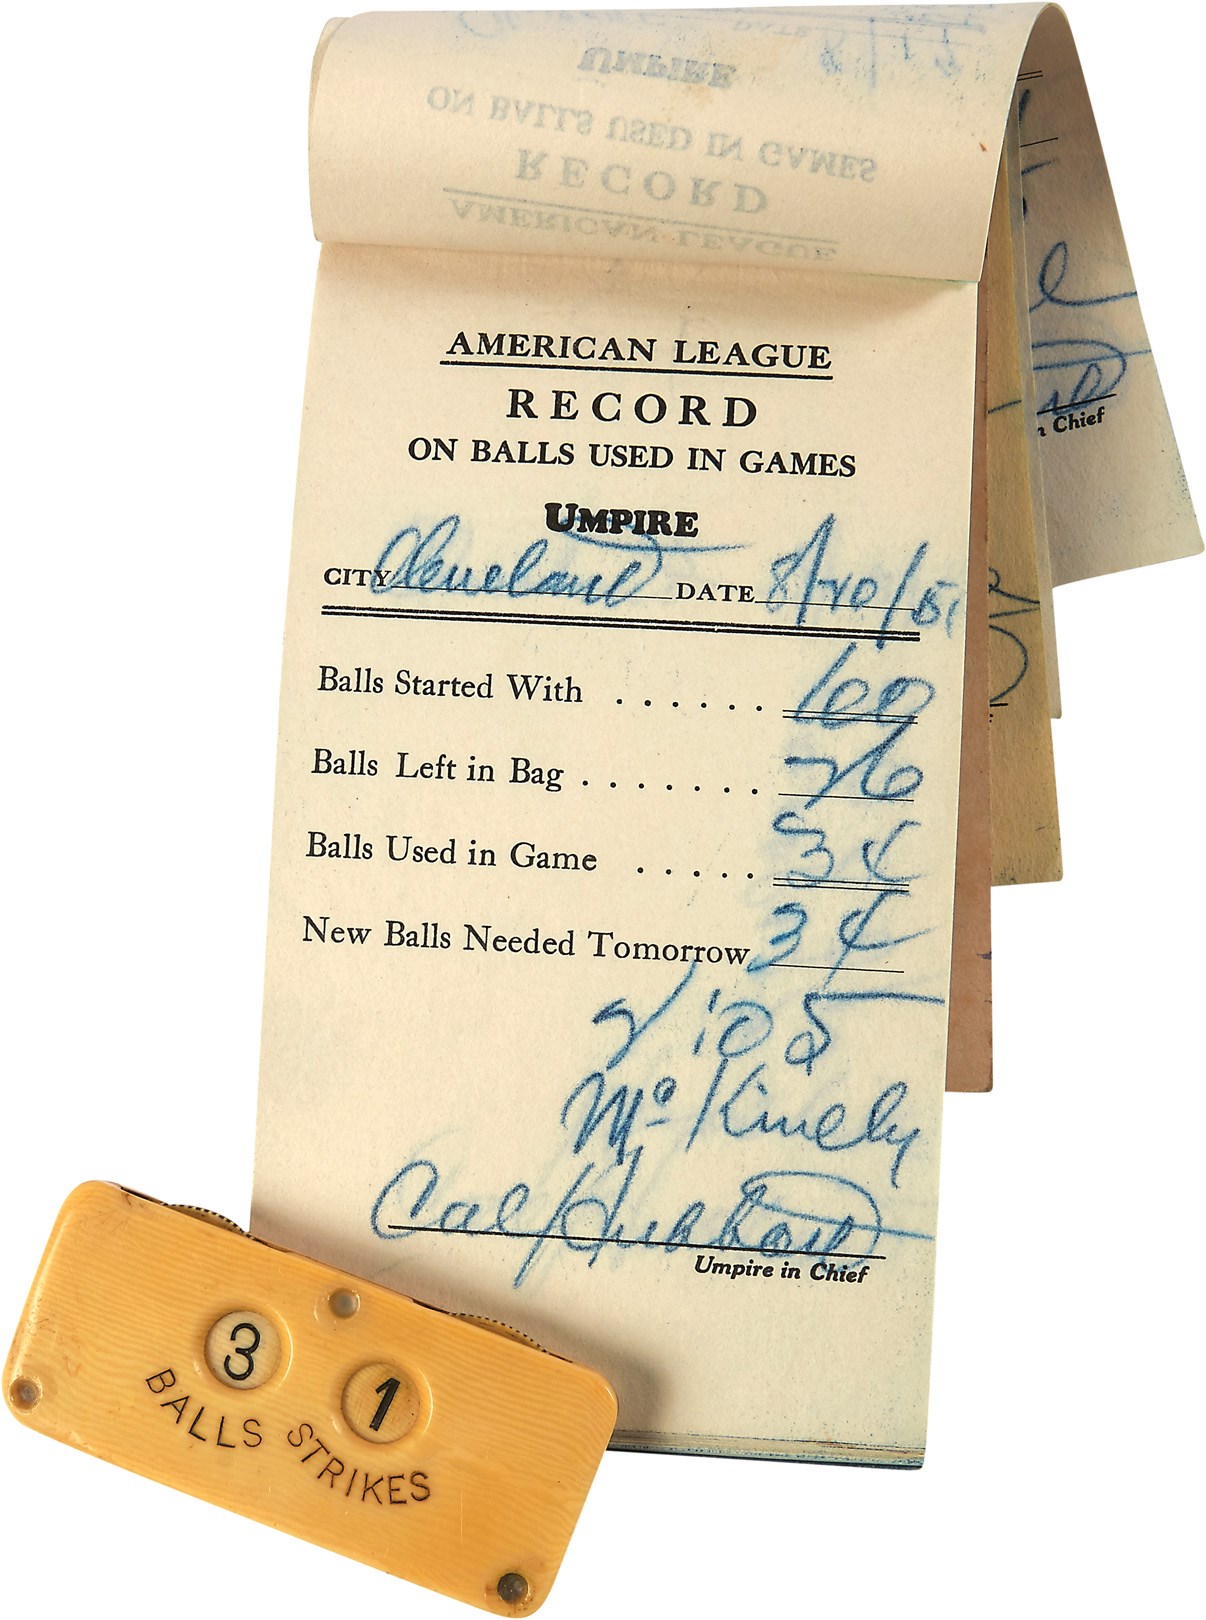 - Cal Hubbard's Umpire Indicator & Historic 1951 Record Book